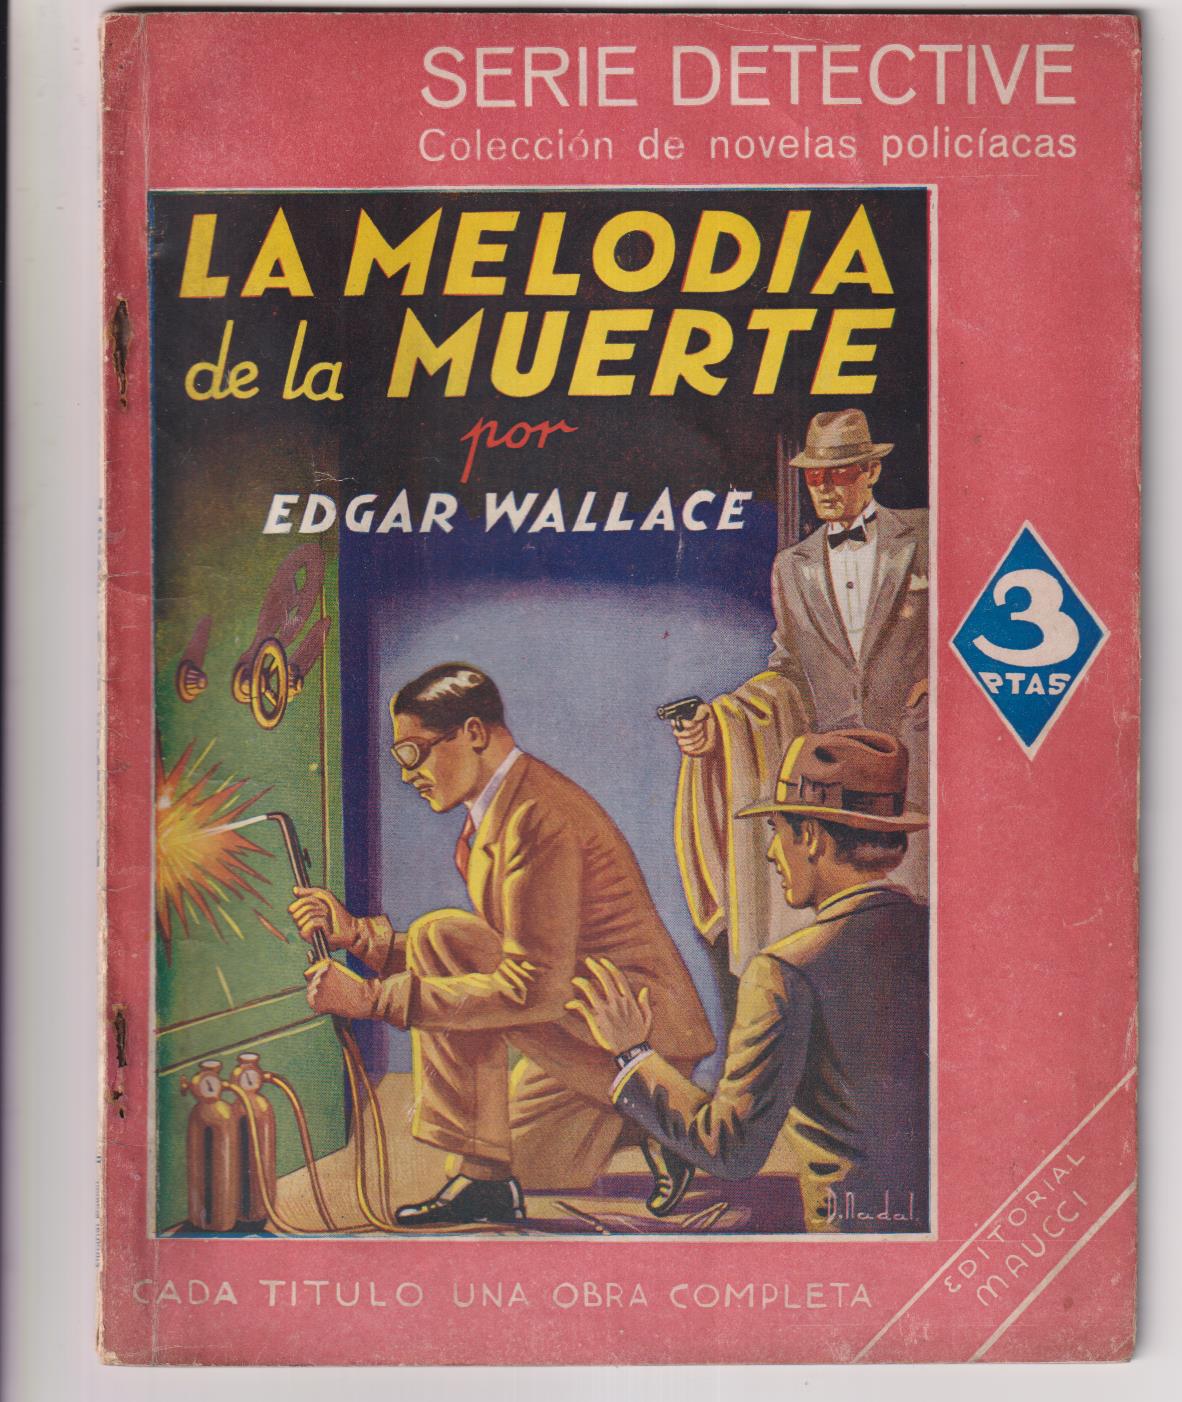 Edgar Wallace. La Melodía de la muerte. Serie Detective. Maucci